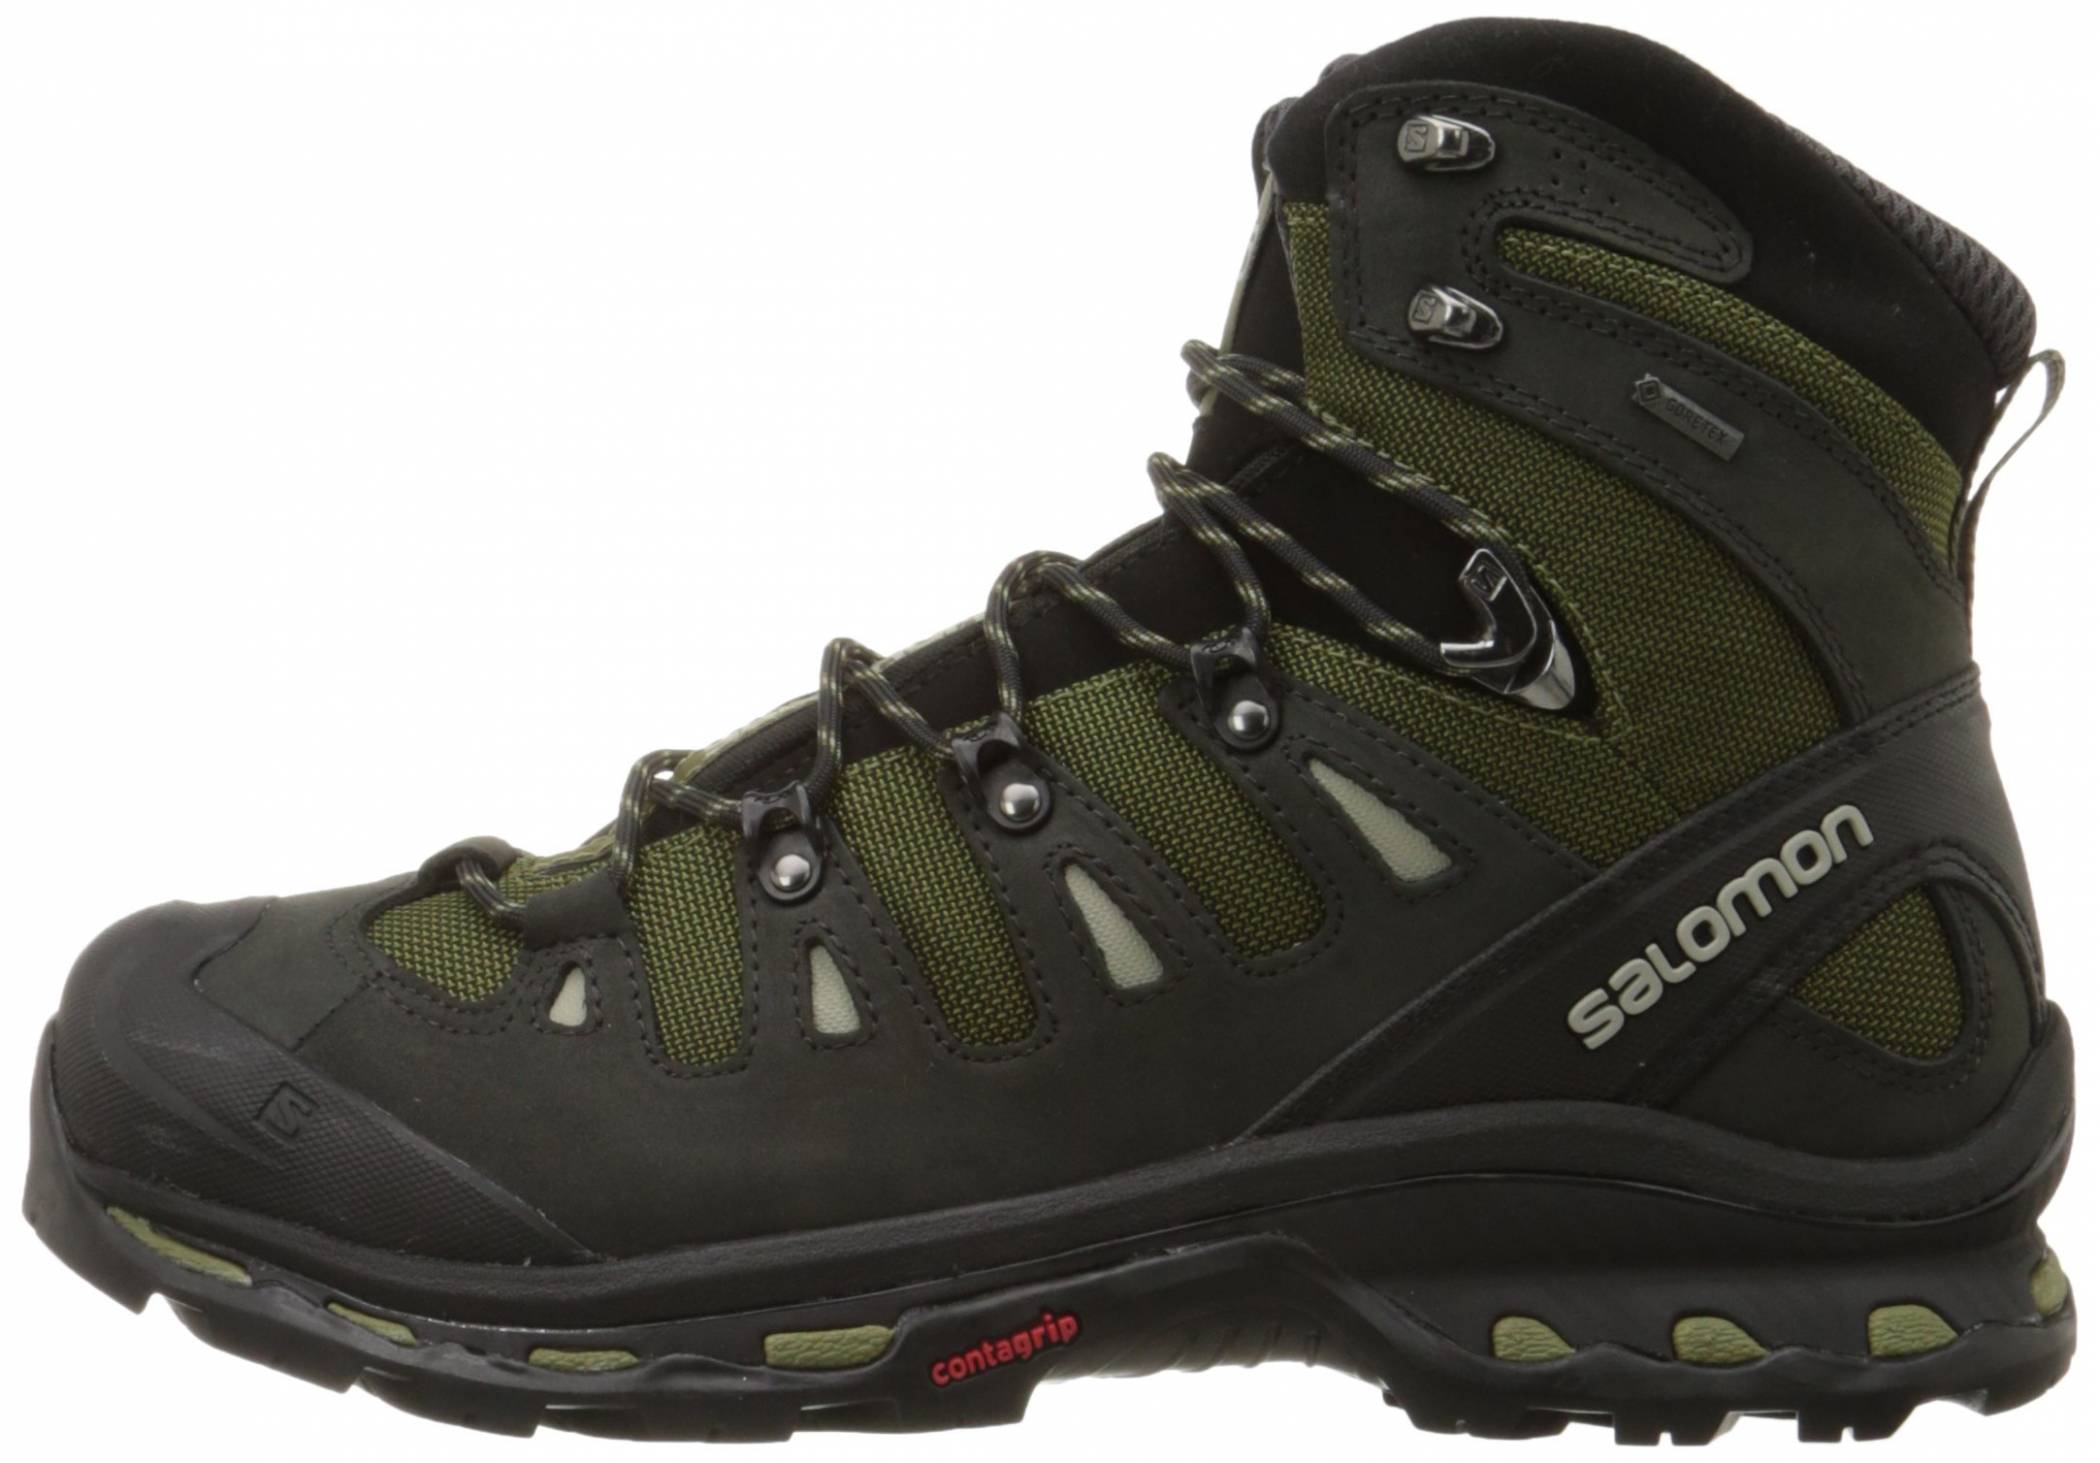 Save 39% on Salomon Hiking Boots (23 